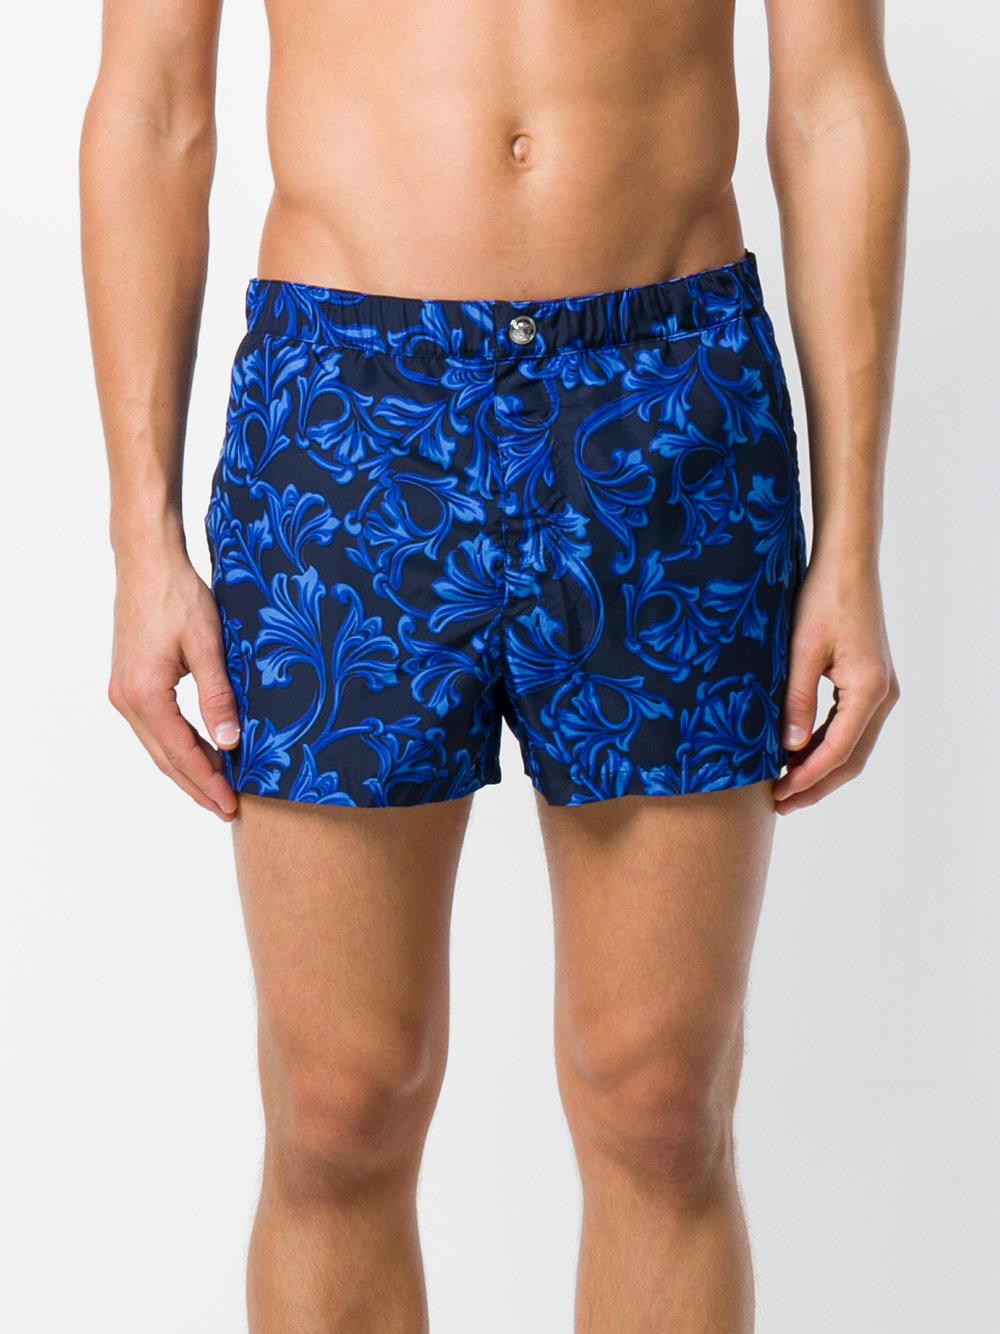 Versace Baroque Swim Shorts in Blue for Men - Lyst